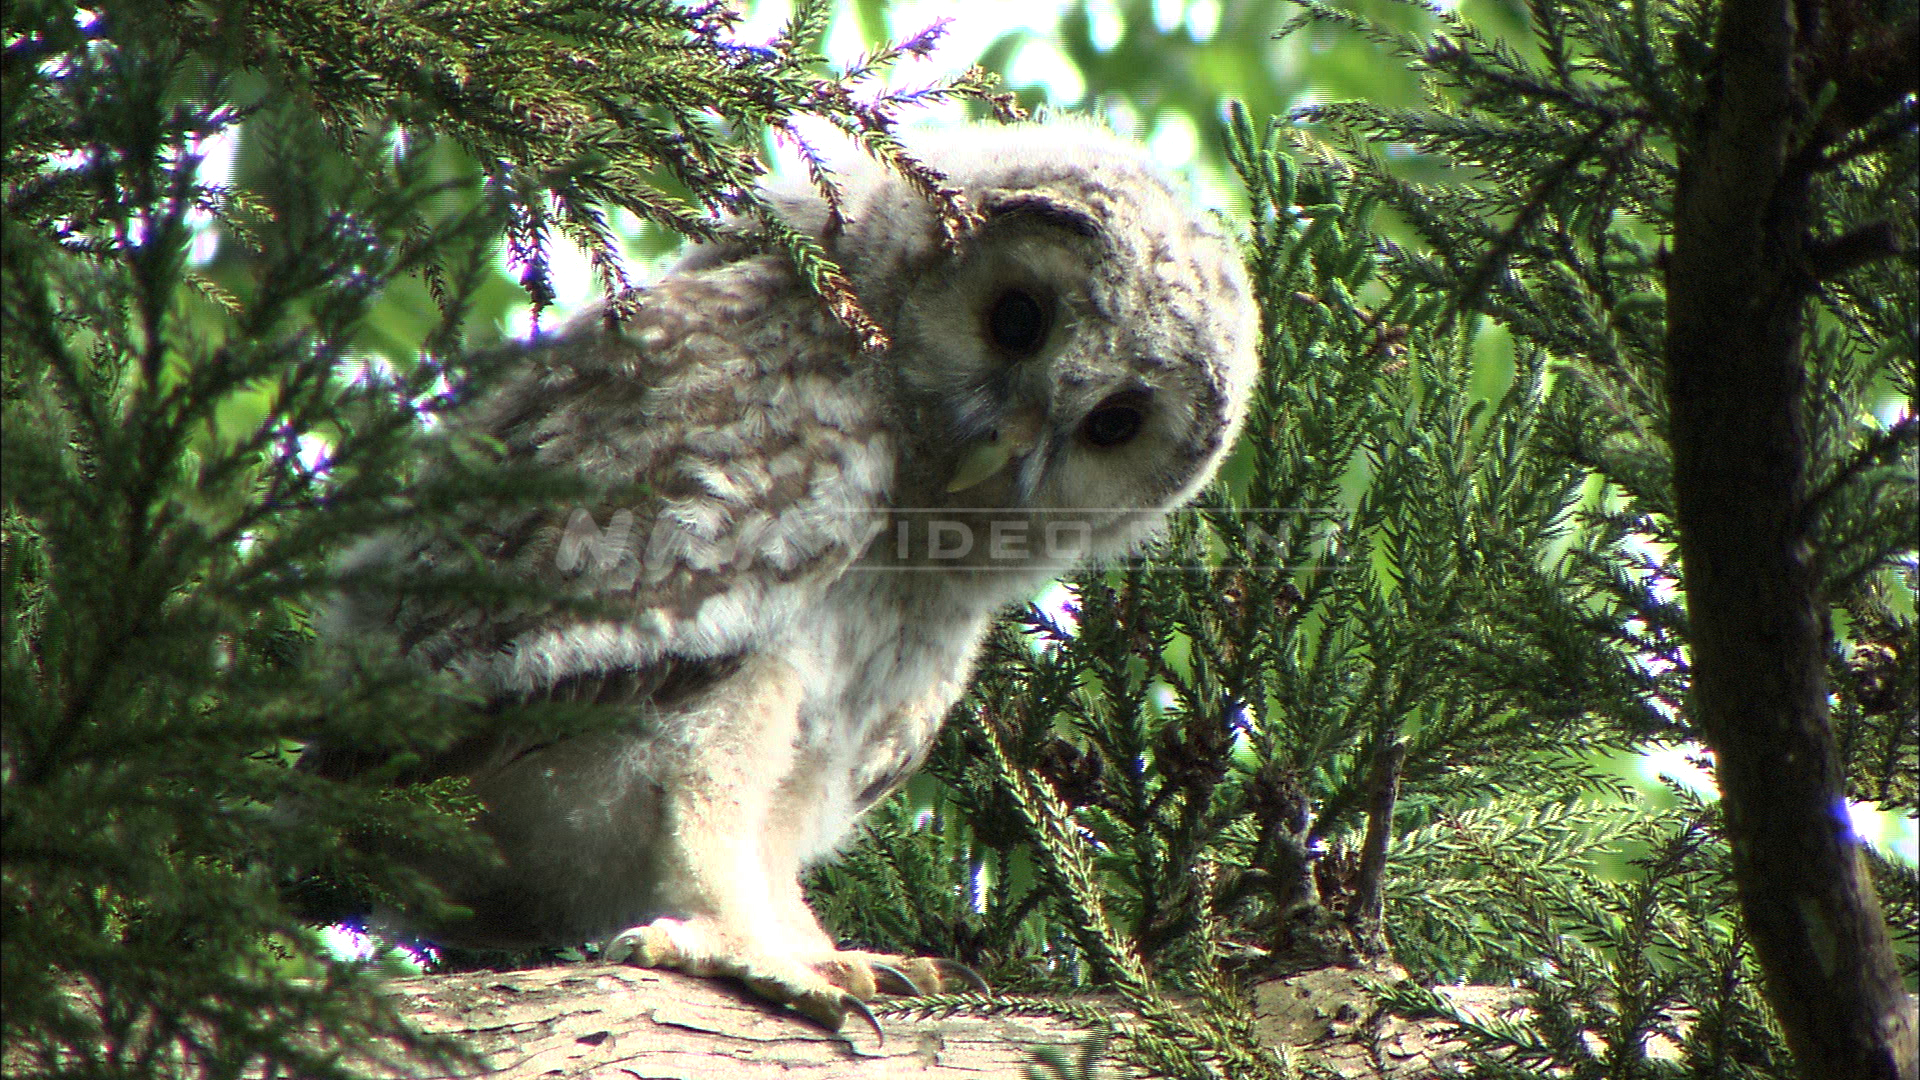 Adorable baby owl sitting on a cedar branch